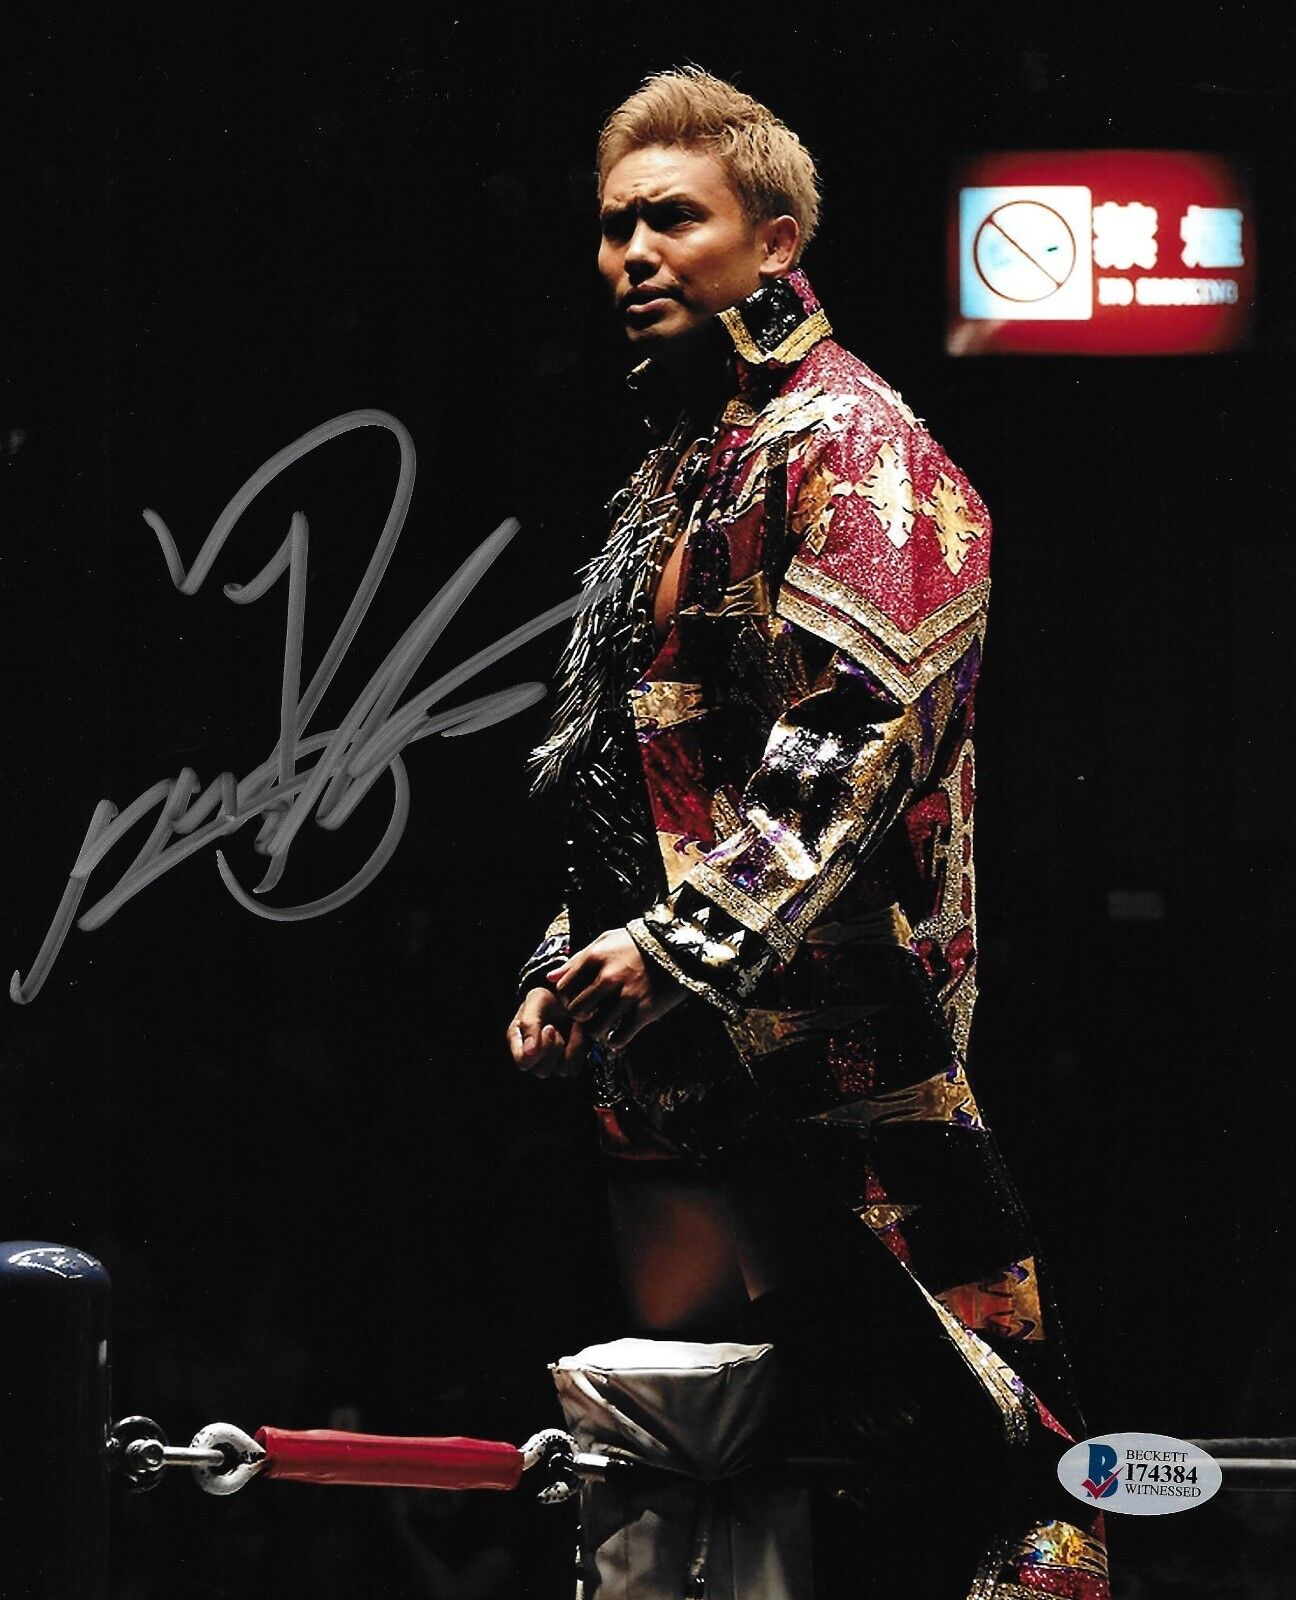 Kazuchika Okada Signed 8x10 Photo Poster painting BAS COA New Japan Pro Wrestling Picture Auto L